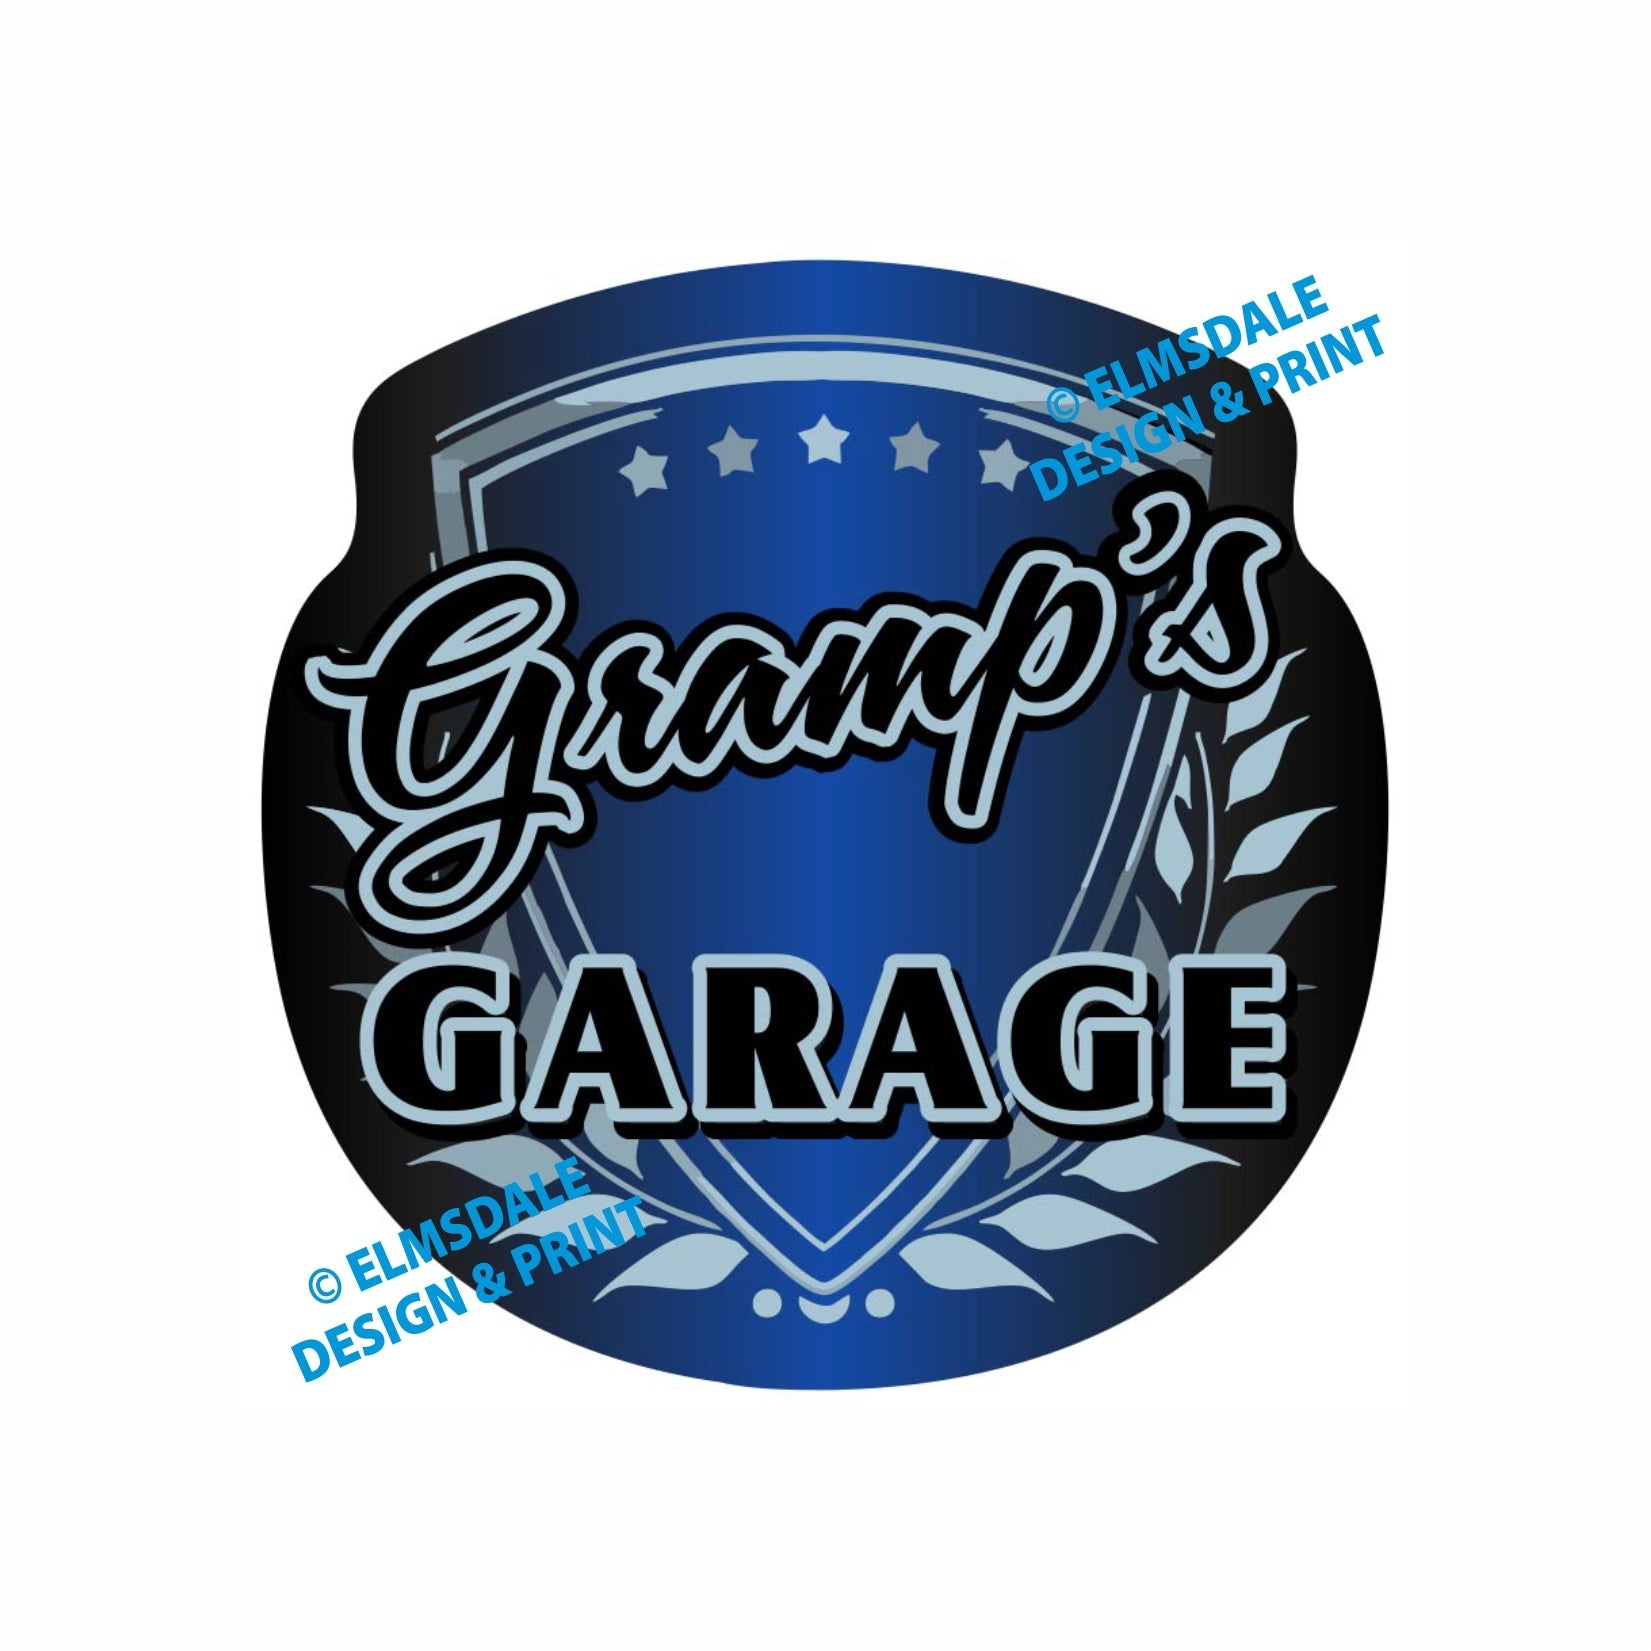 Gramps Garage - Decal / 9.25’ x 9.25’ / Silver & Blue